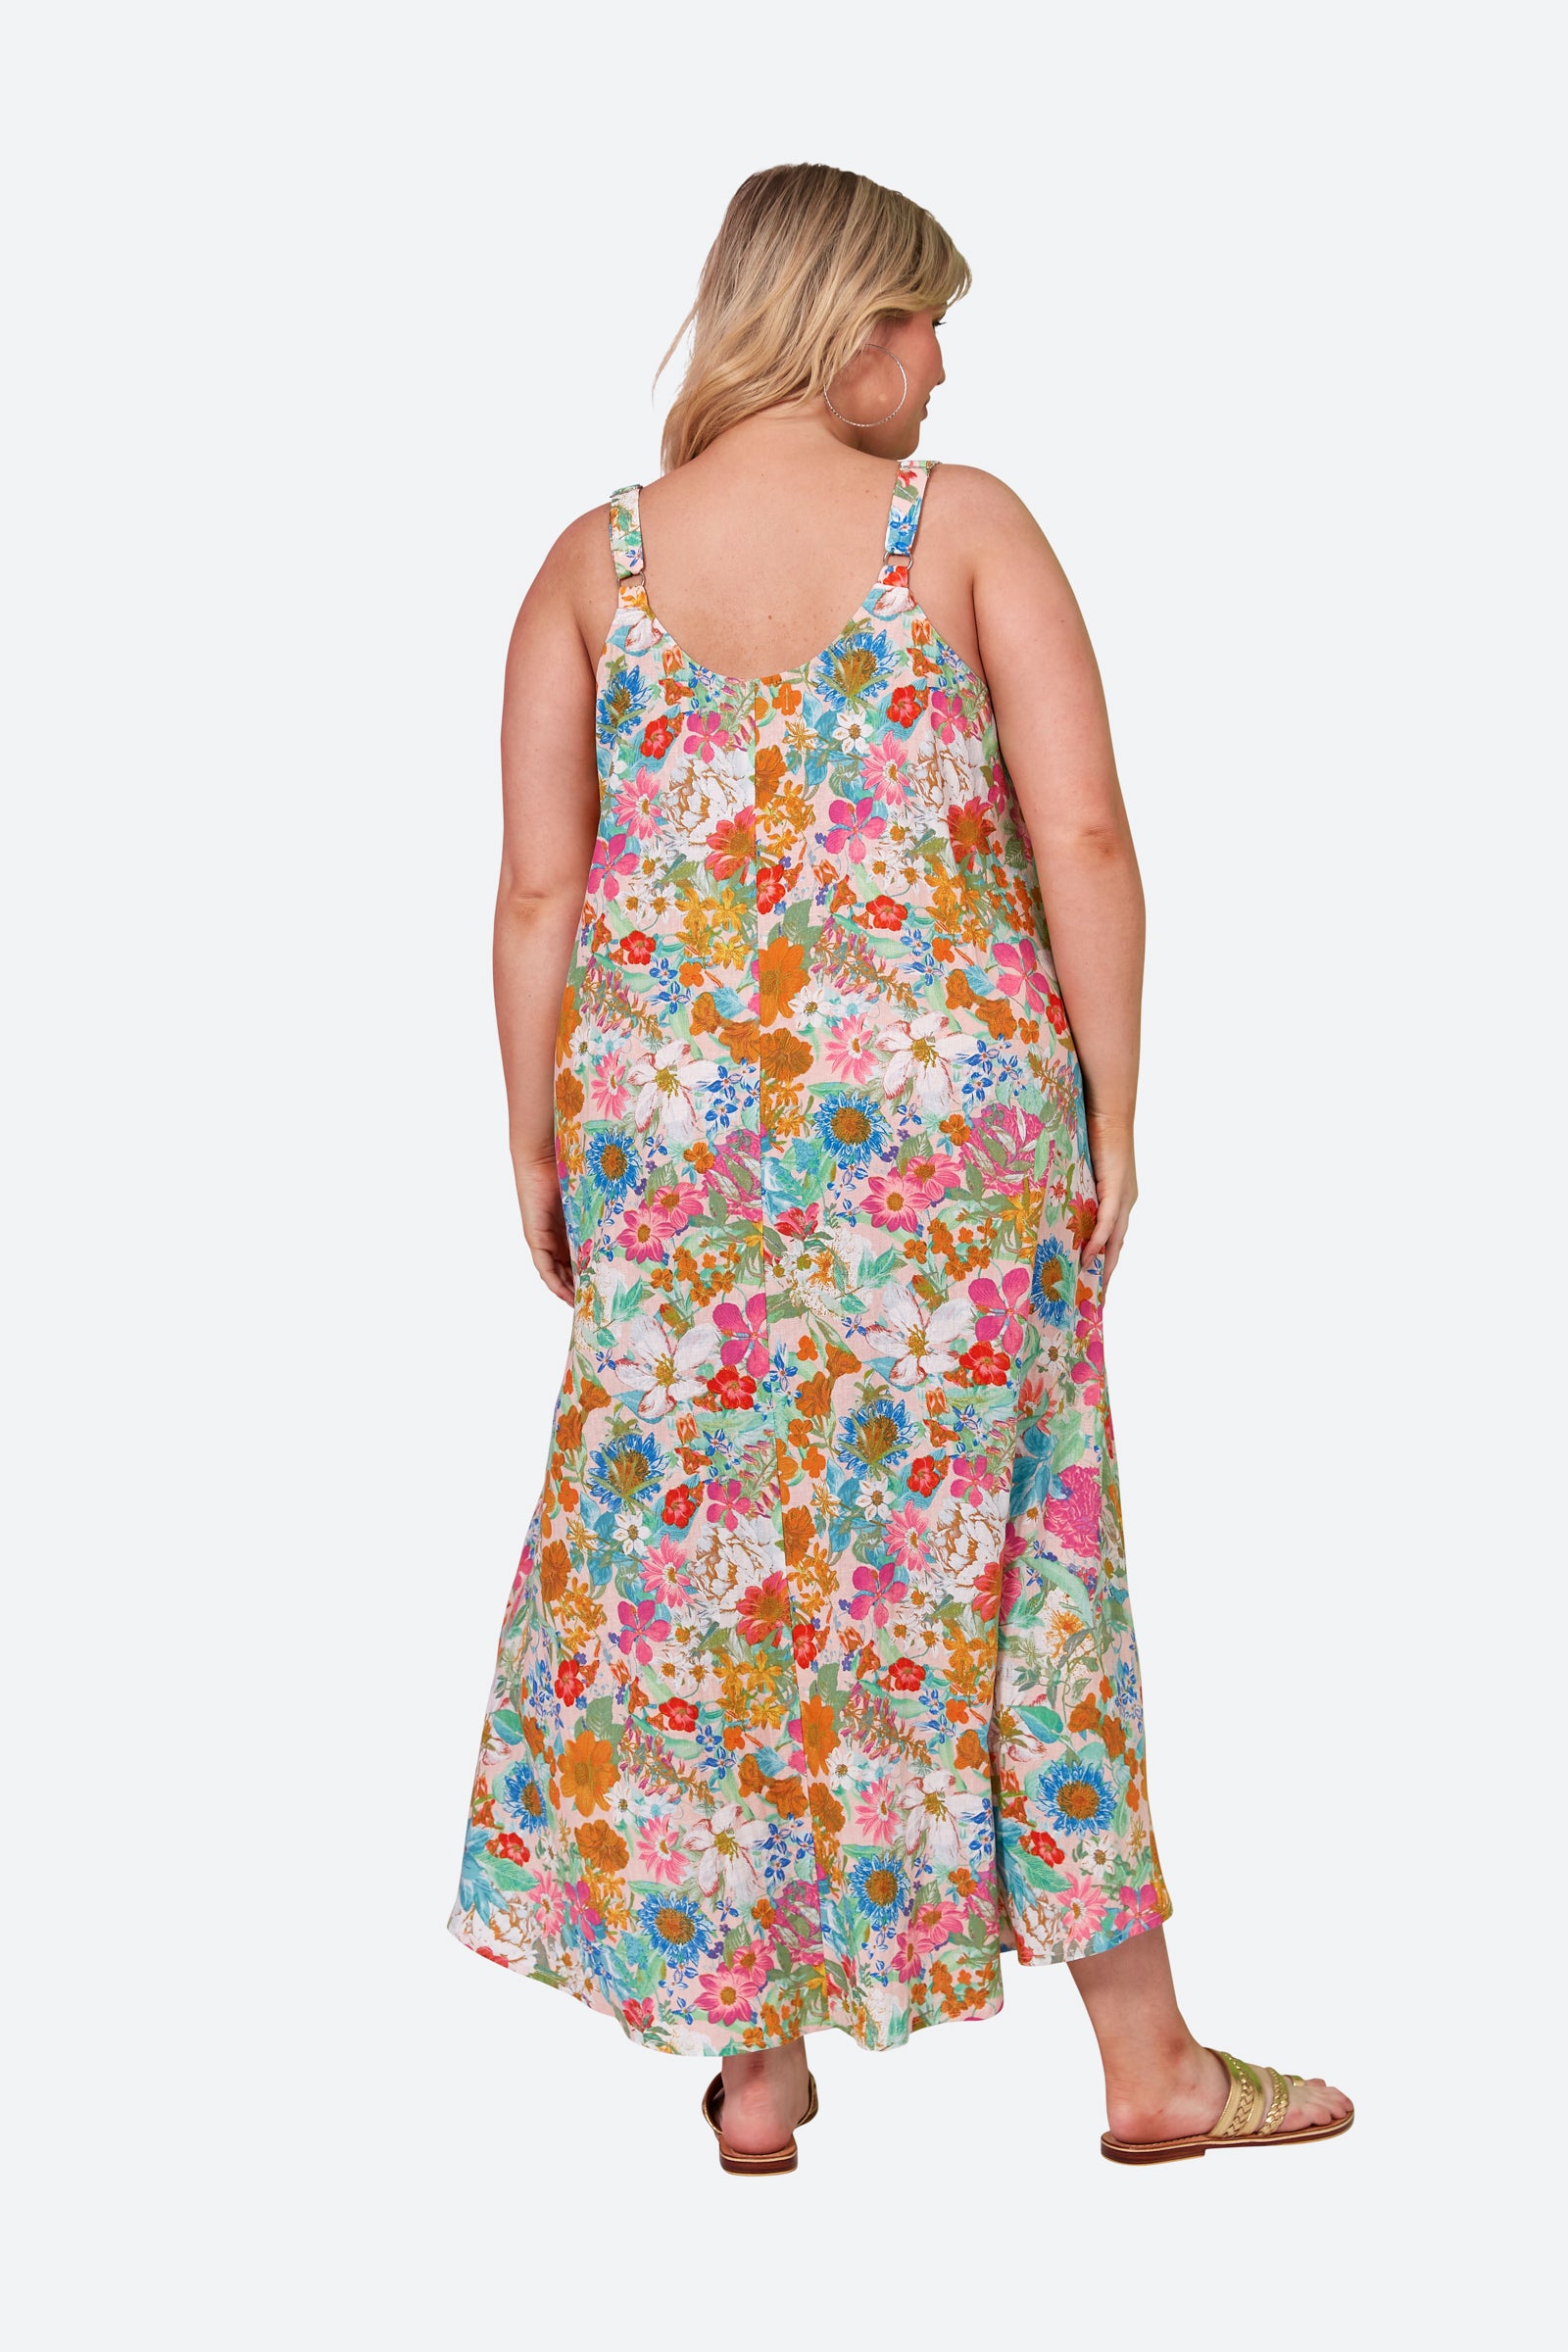 Verve Tank Maxi - Pink Flourish - eb&ive Clothing - Dress Strappy Maxi Linen